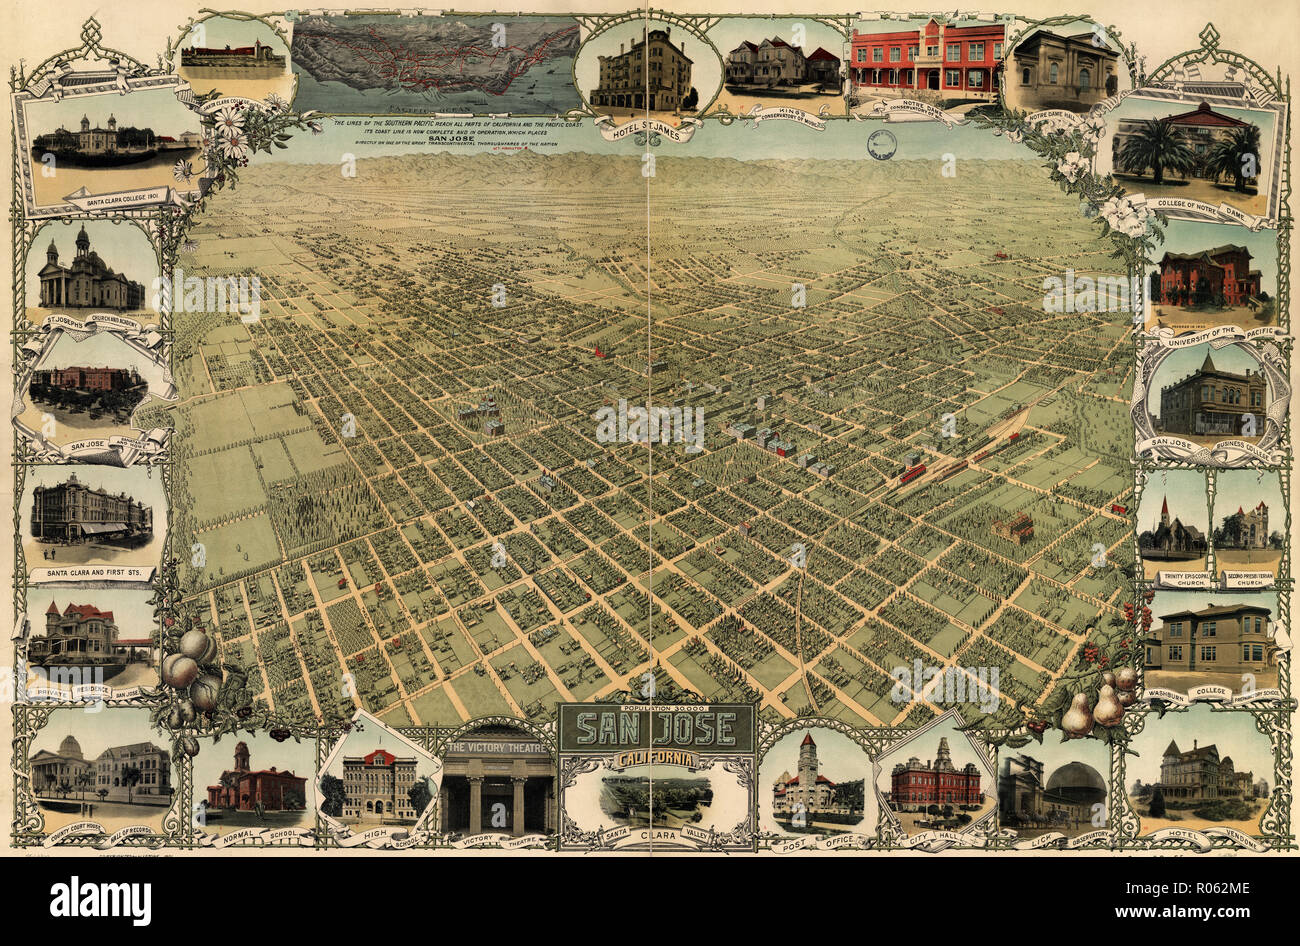 San Jose, Kalifornien, ca. 1901 Stockfoto